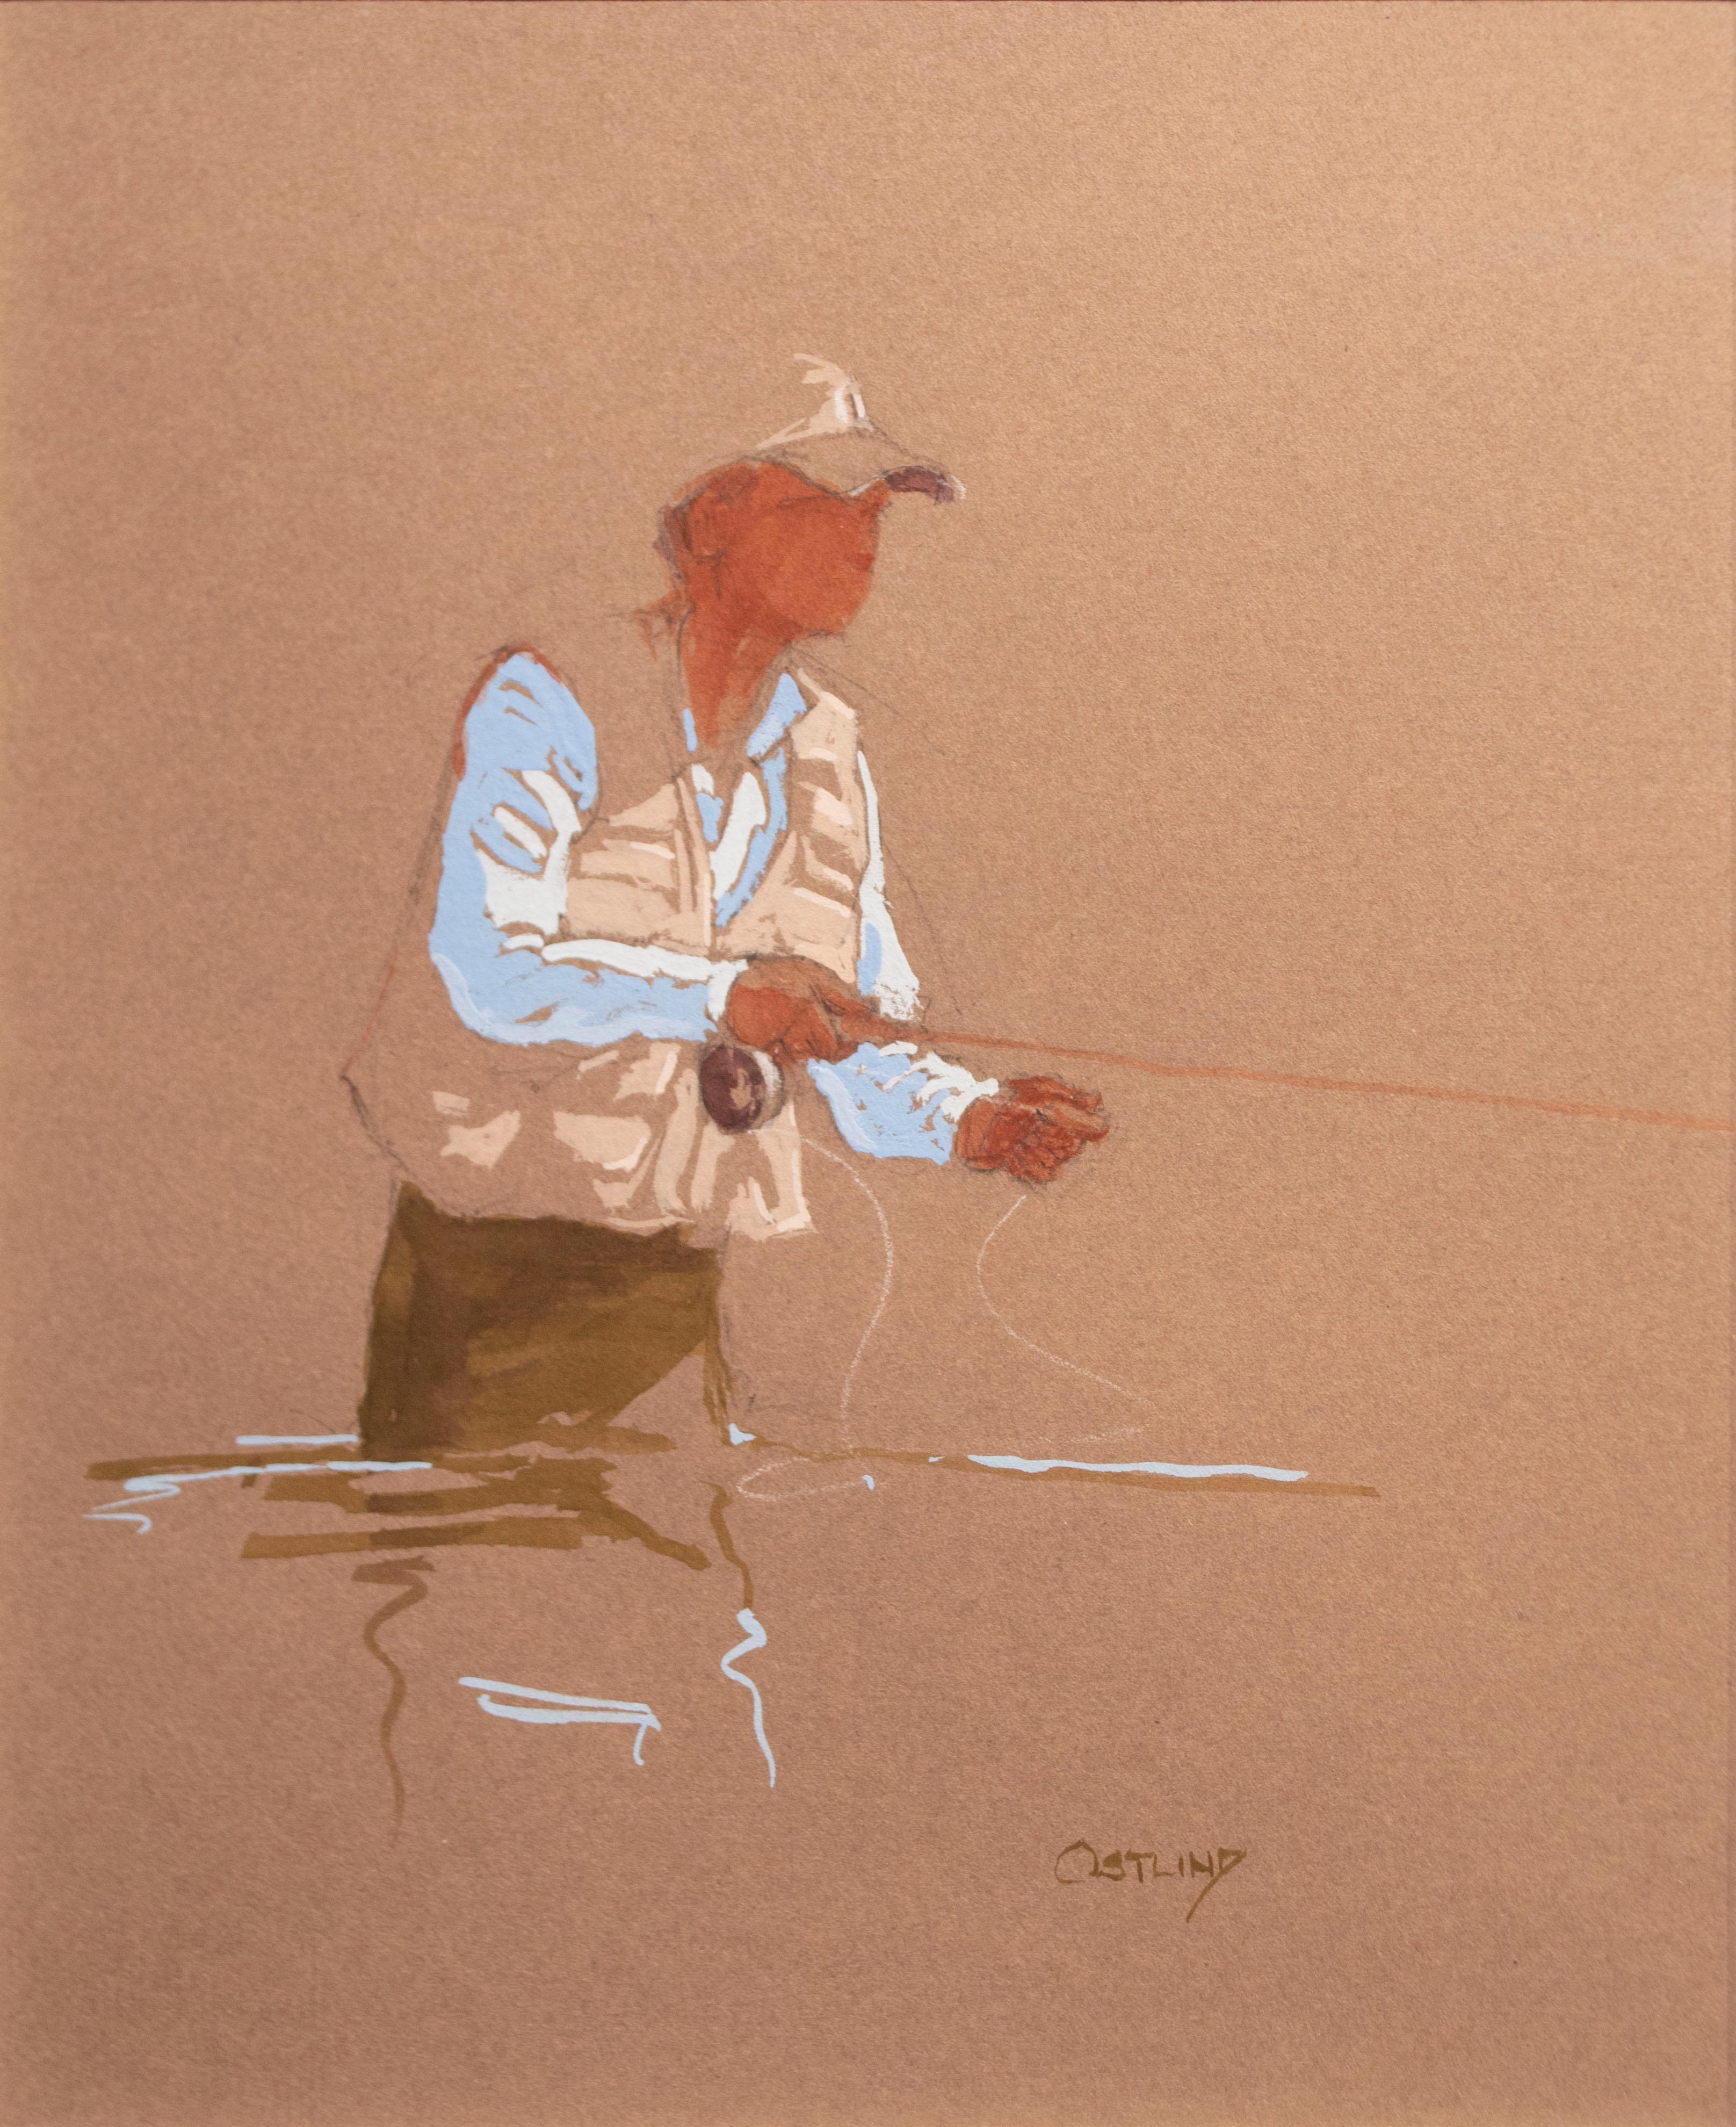 Joel Ostlind Figurative Art - Getting the Drift (flyfishing, action, river)